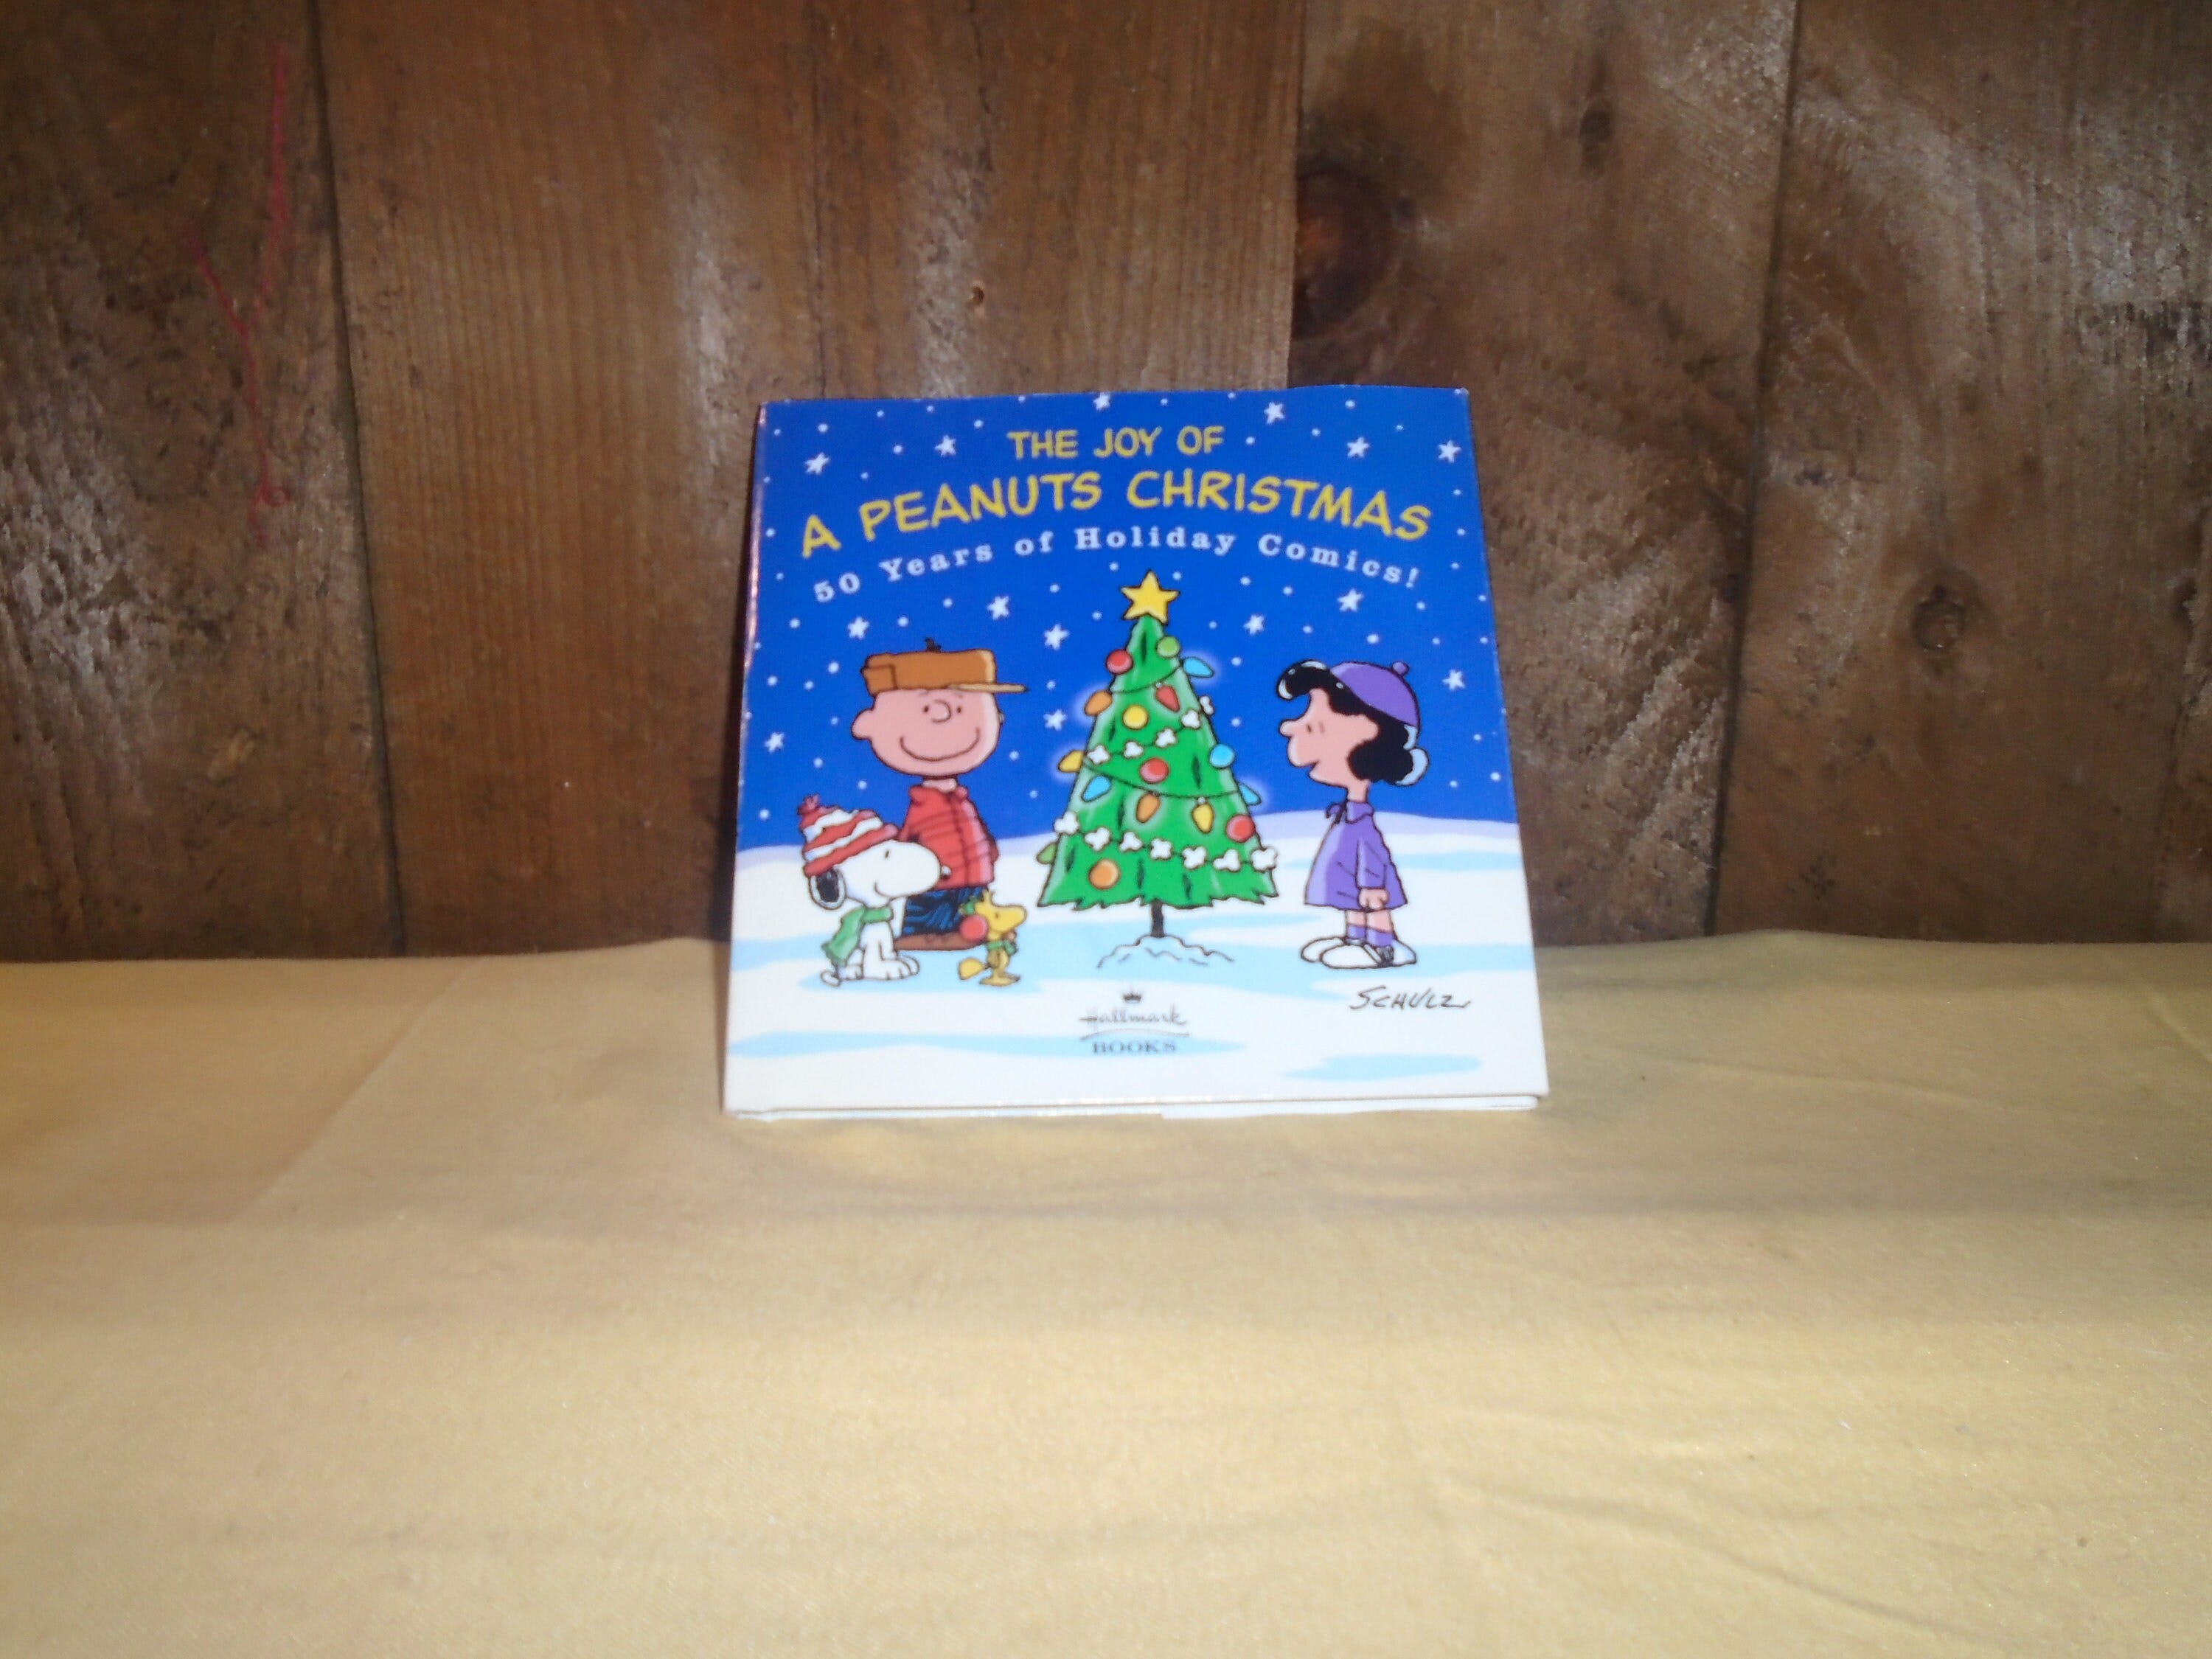 The Joy Of A Peanuts Christmas 50 Years of Holiday Comics Hardcover Hallmark Book